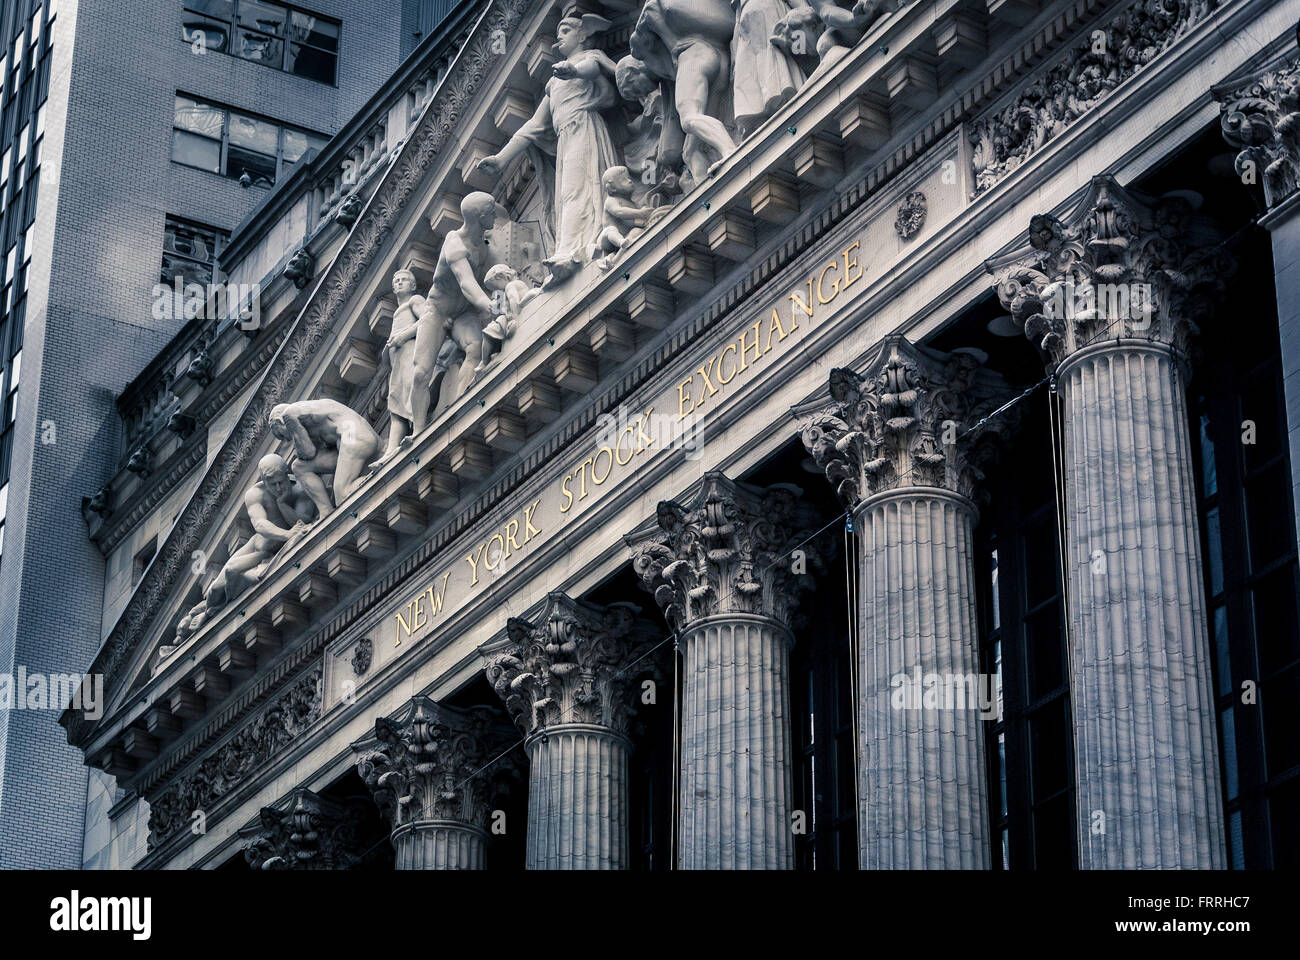 Bolsa de Valores de Nueva York, Wall Street, New York City, Estados Unidos. Foto de stock